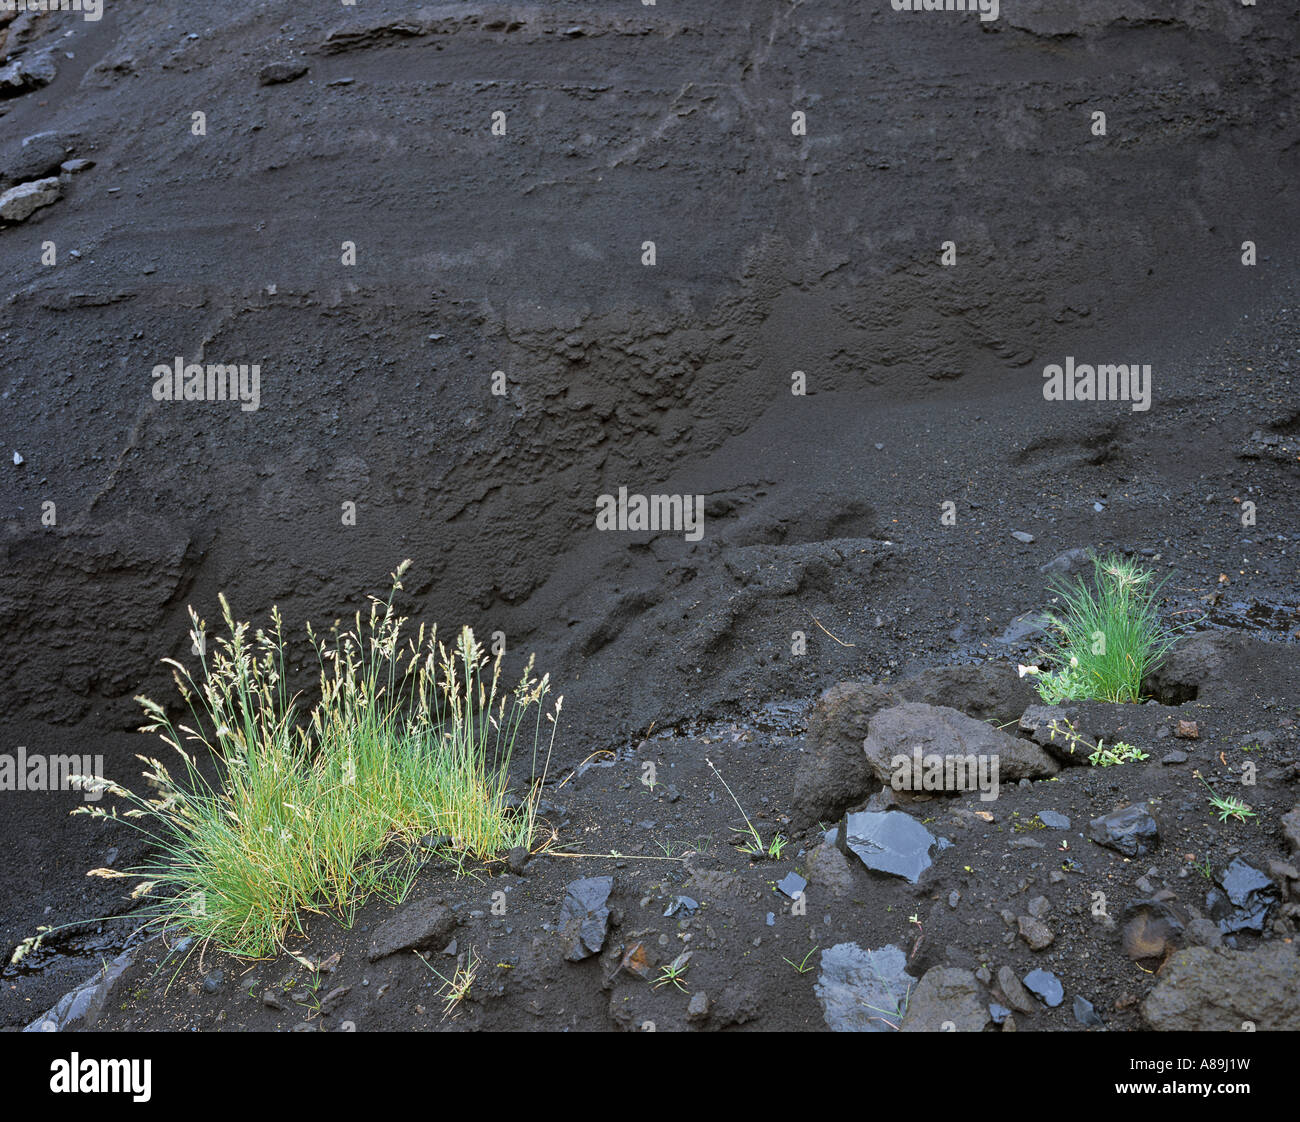 Grass is growing on black lava ash, Thorsmoerk, Iceland Stock Photo